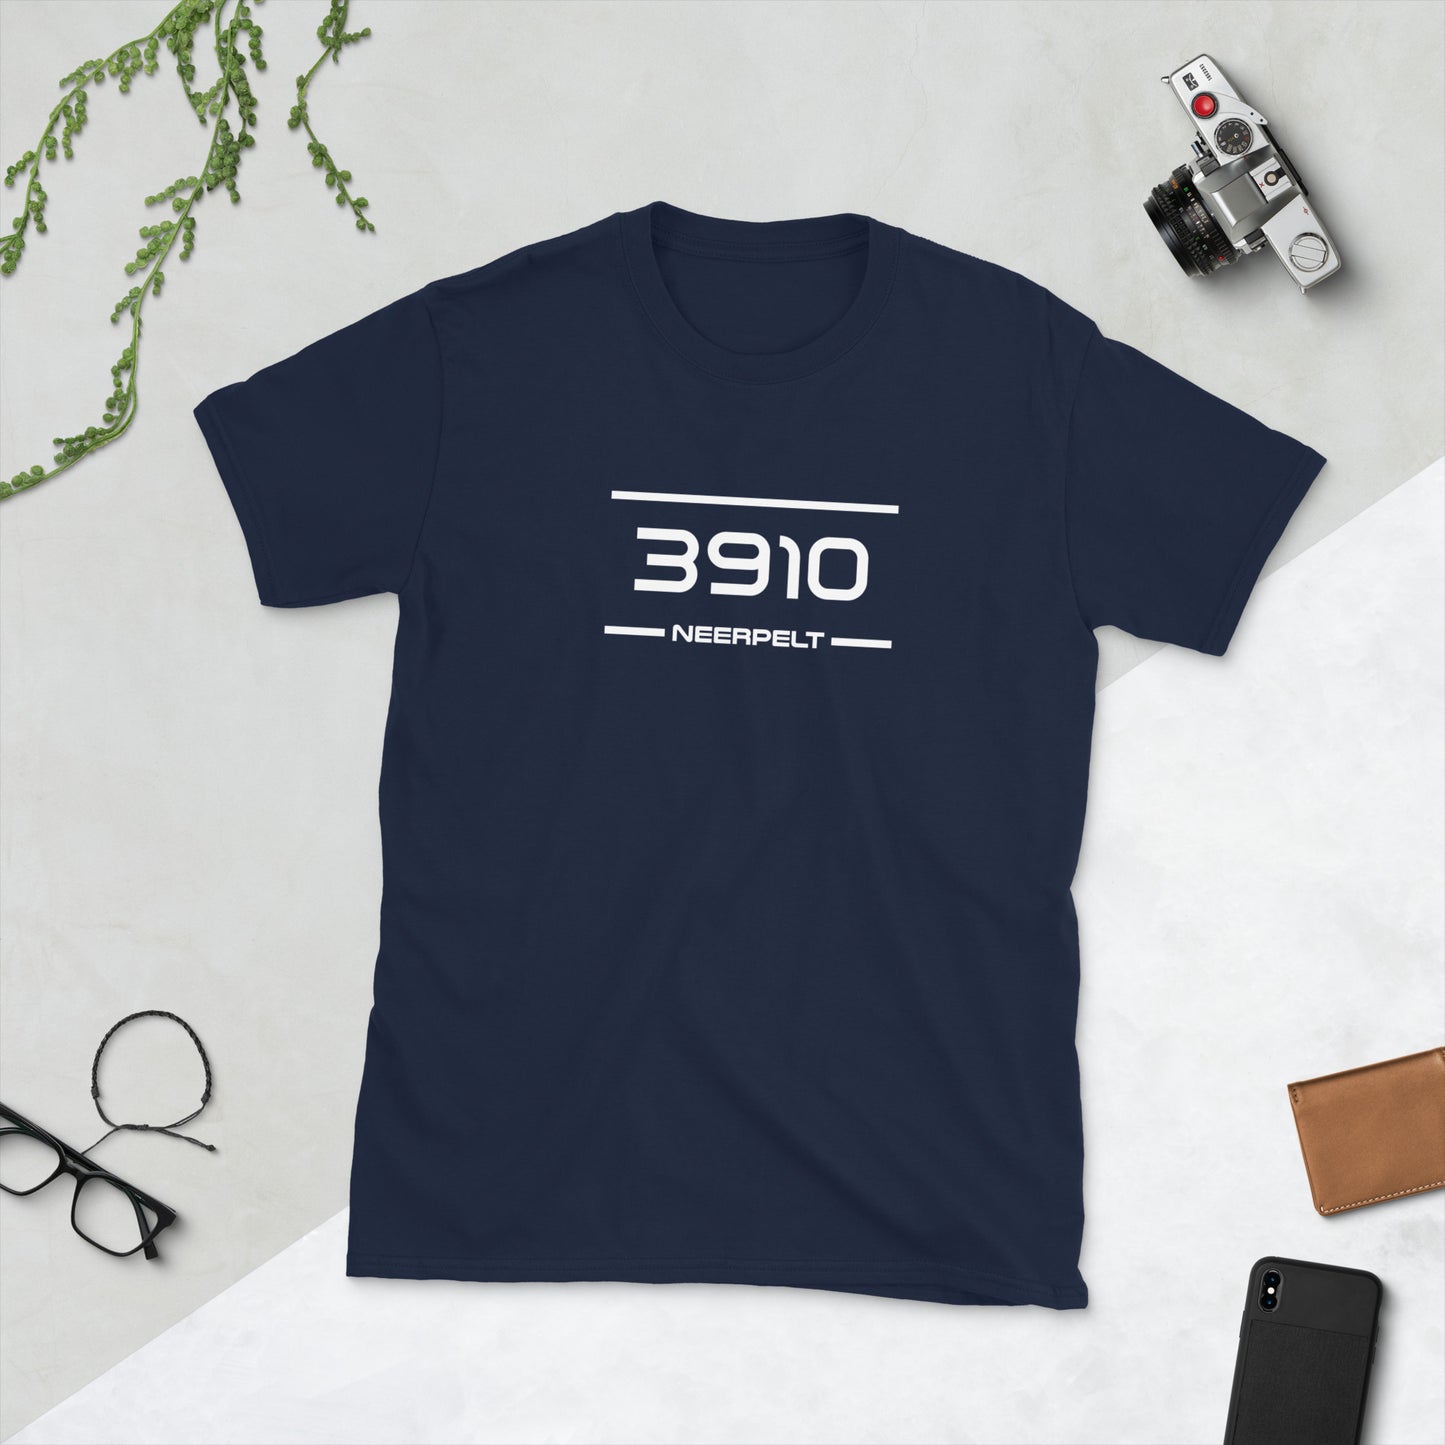 Tshirt - 3910 - Neerpelt